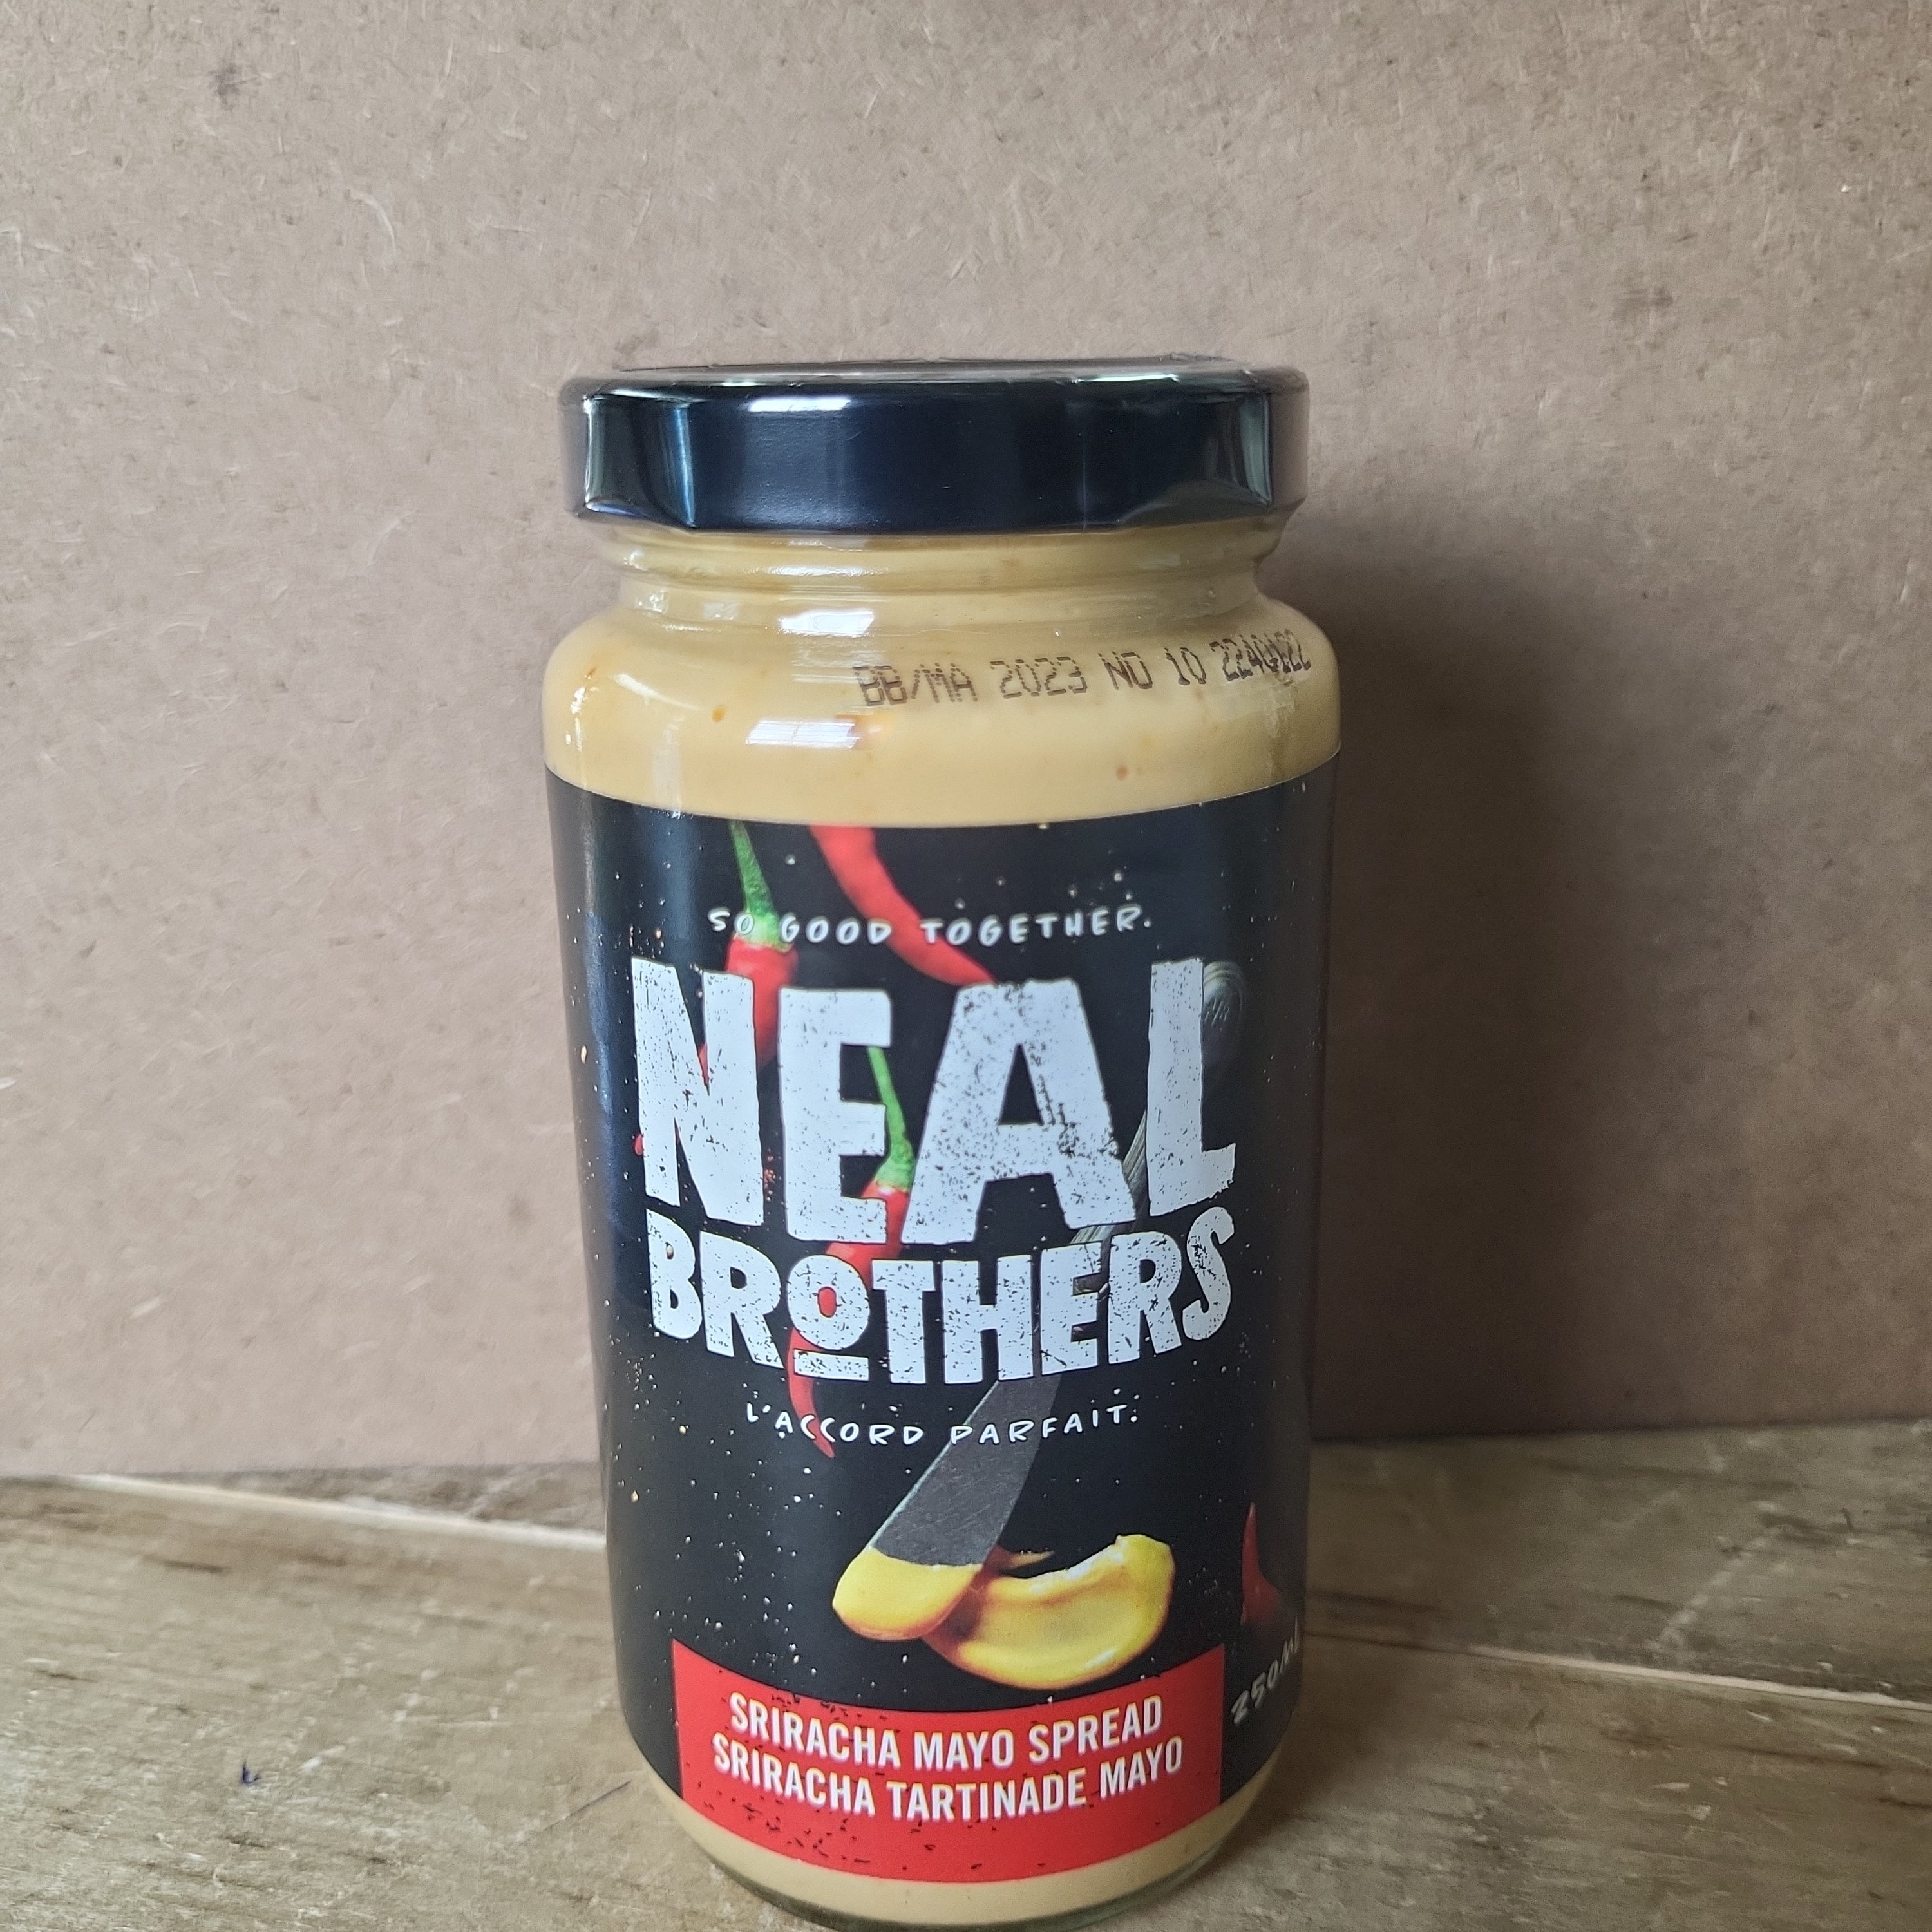 Neal Brothers Sriracha Mayo Spread